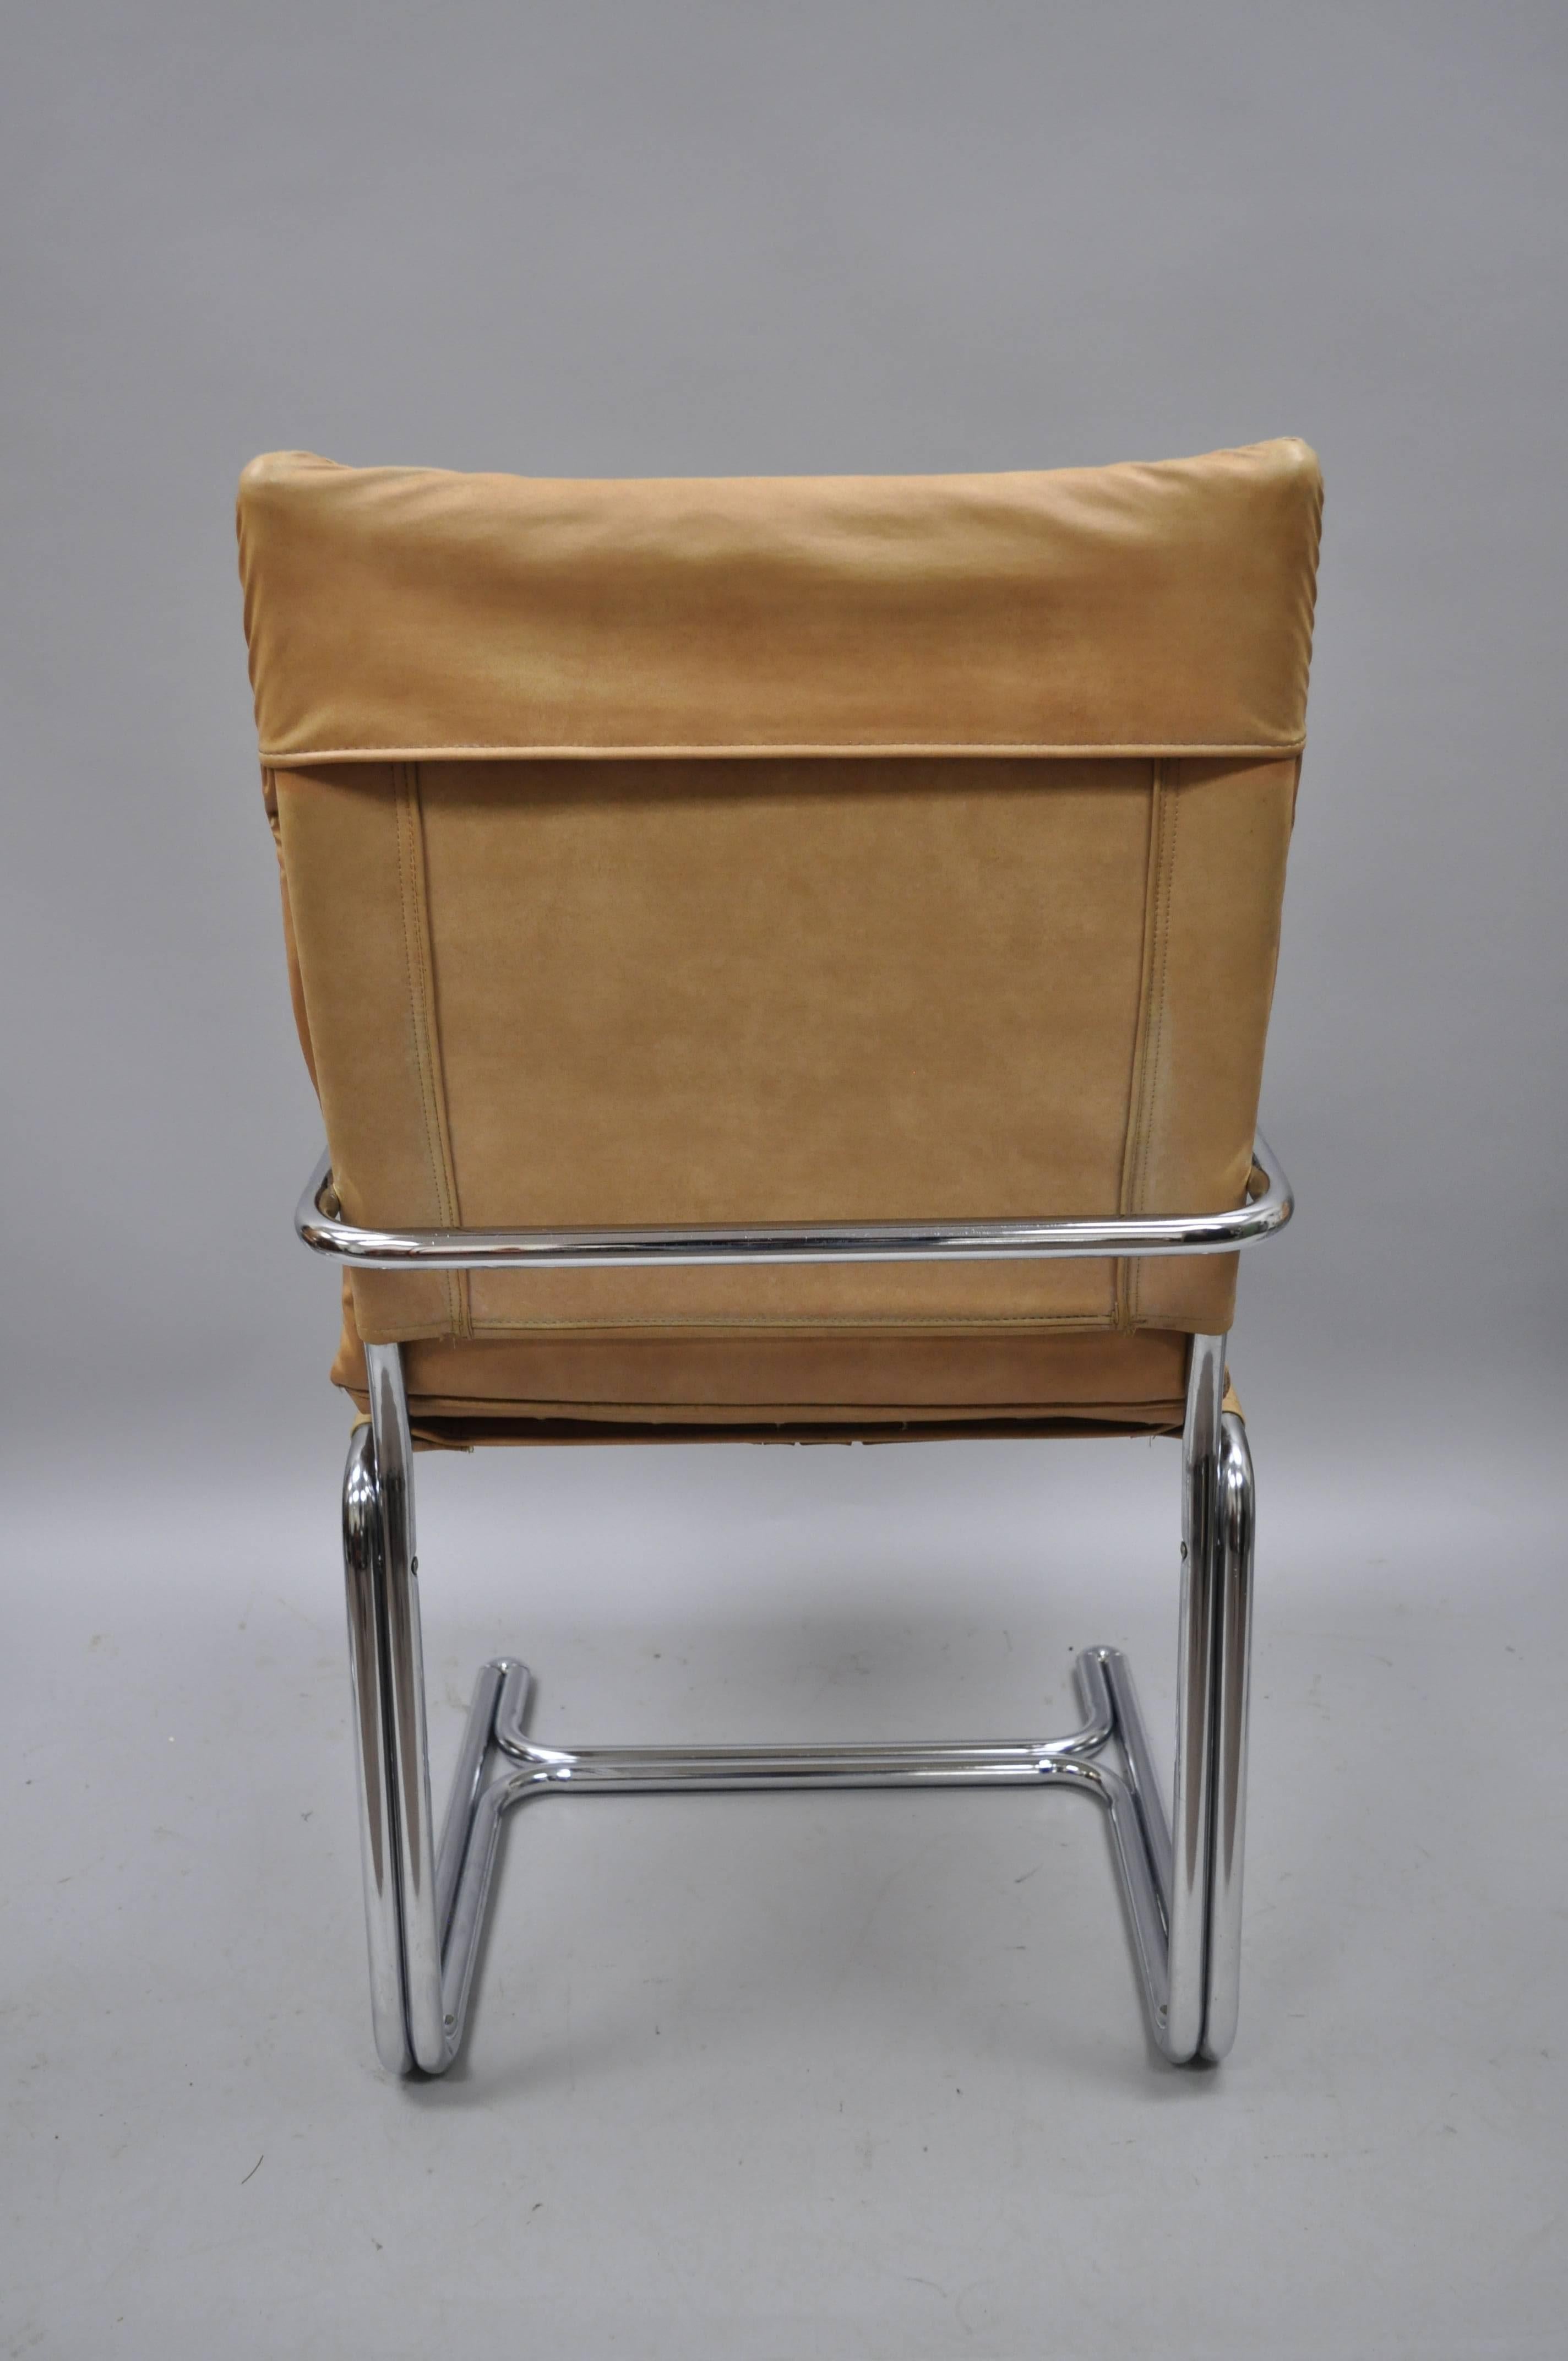 Four Tubular Chrome Cantilever Style Arm Chairs by Cosco Inc after Milo Baughman 1